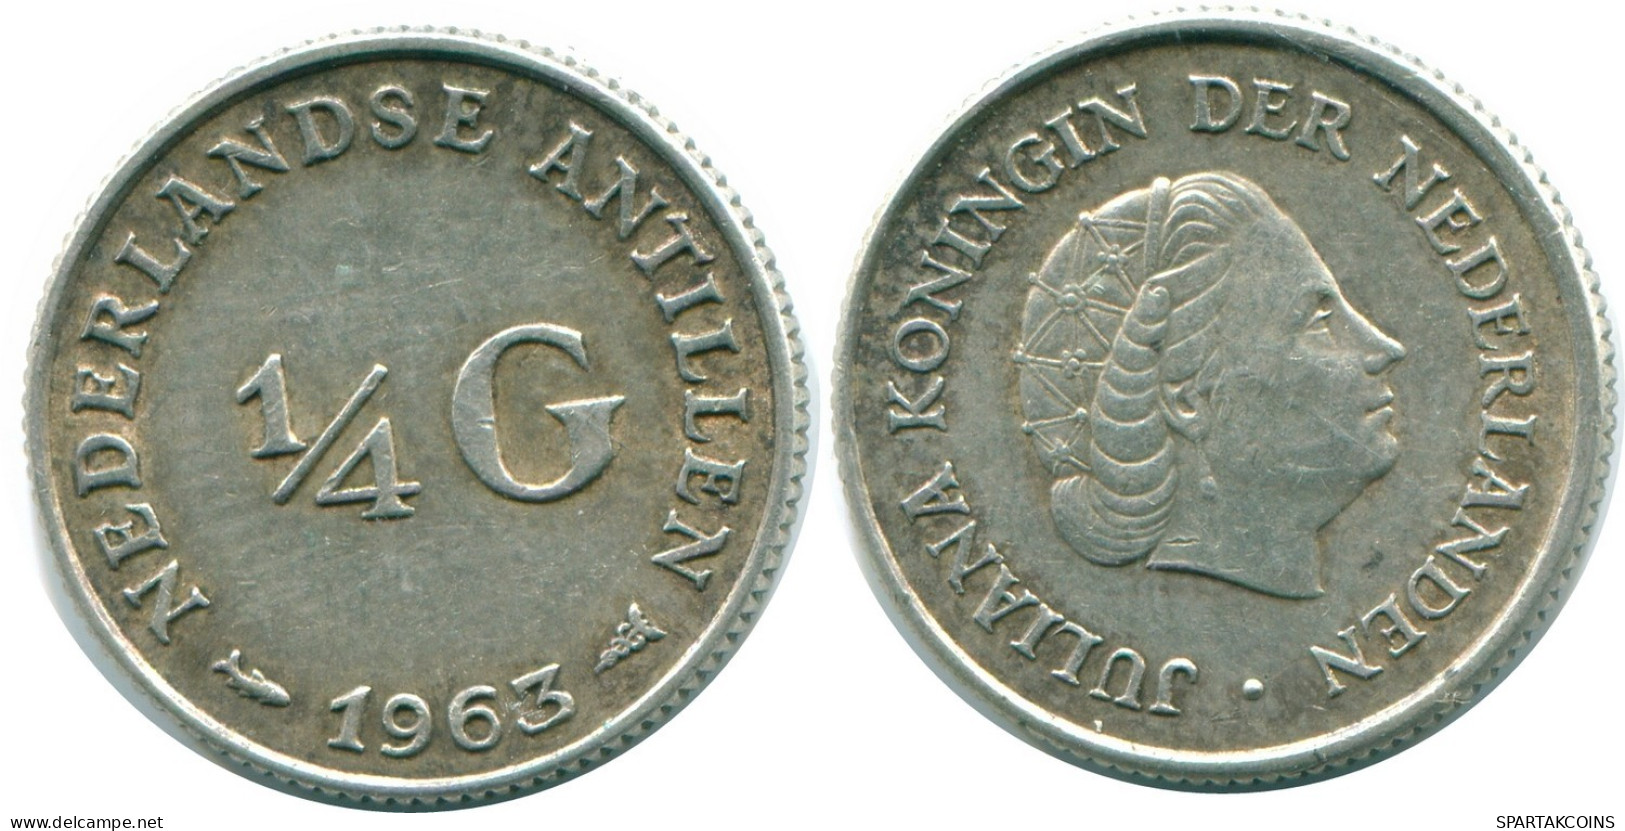 1/4 GULDEN 1963 NIEDERLÄNDISCHE ANTILLEN SILBER Koloniale Münze #NL11256.4.D.A - Netherlands Antilles